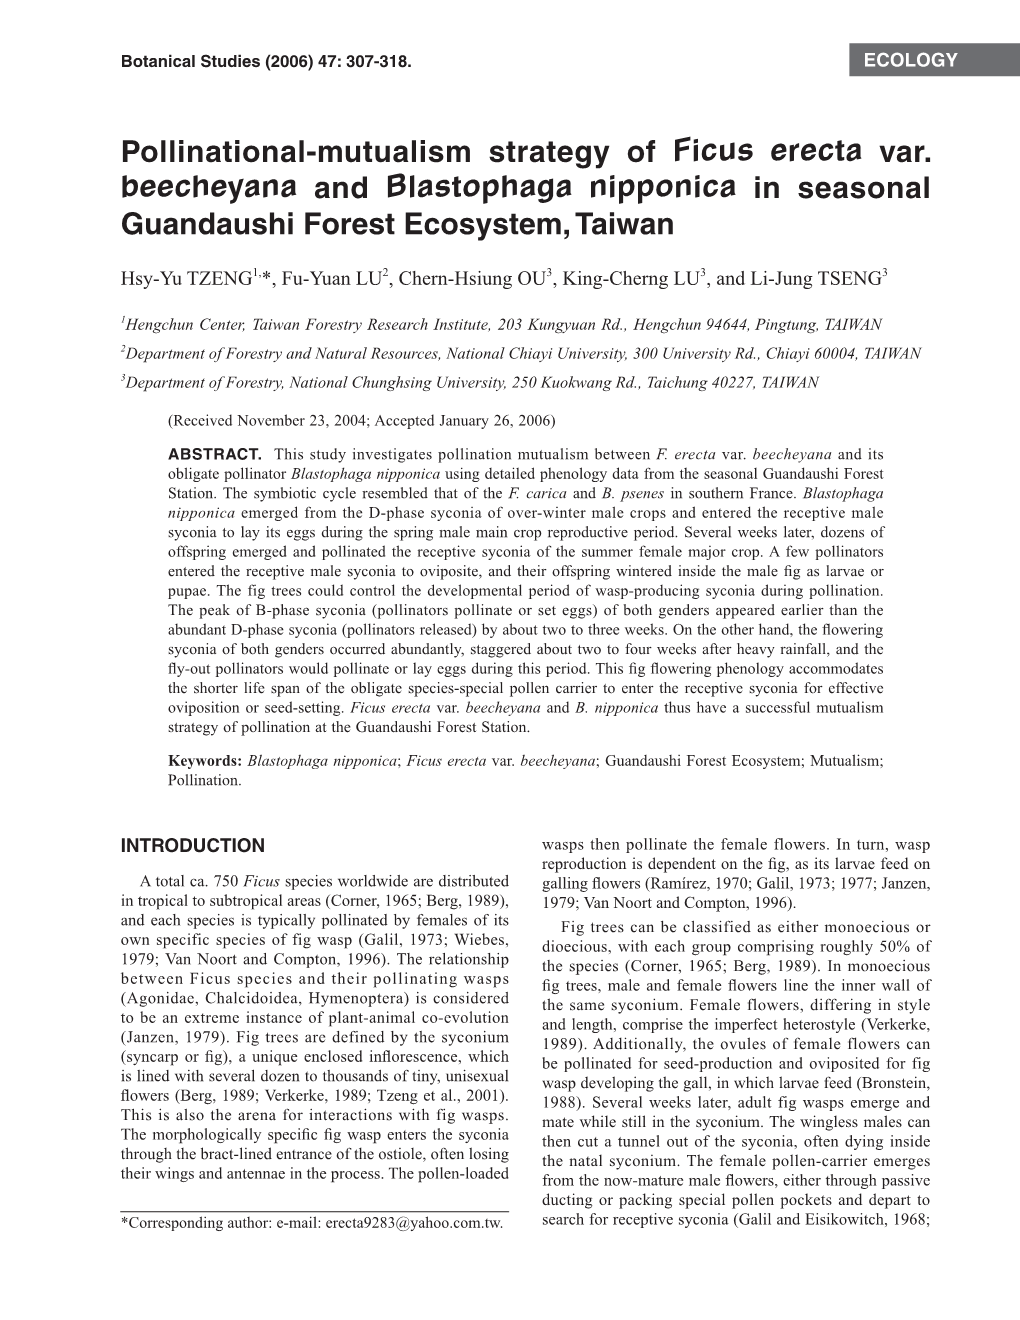 Pollinational-Mutualism Strategy of Ficus Erecta Var. Beecheyana and Blastophaga Nipponica in Seasonal Guandaushi Forest Ecosystem, Taiwan